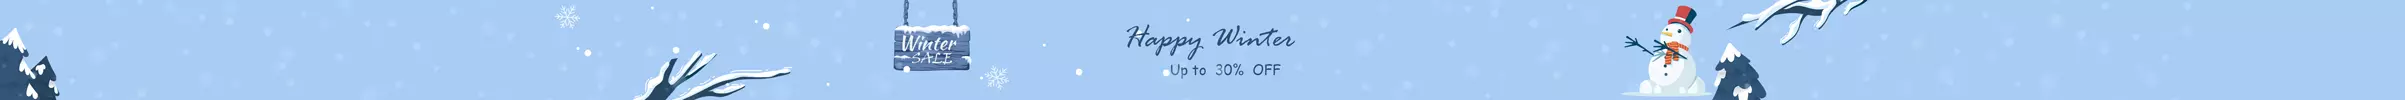 winter offer, happy winter, gowebs offer, satta software development 